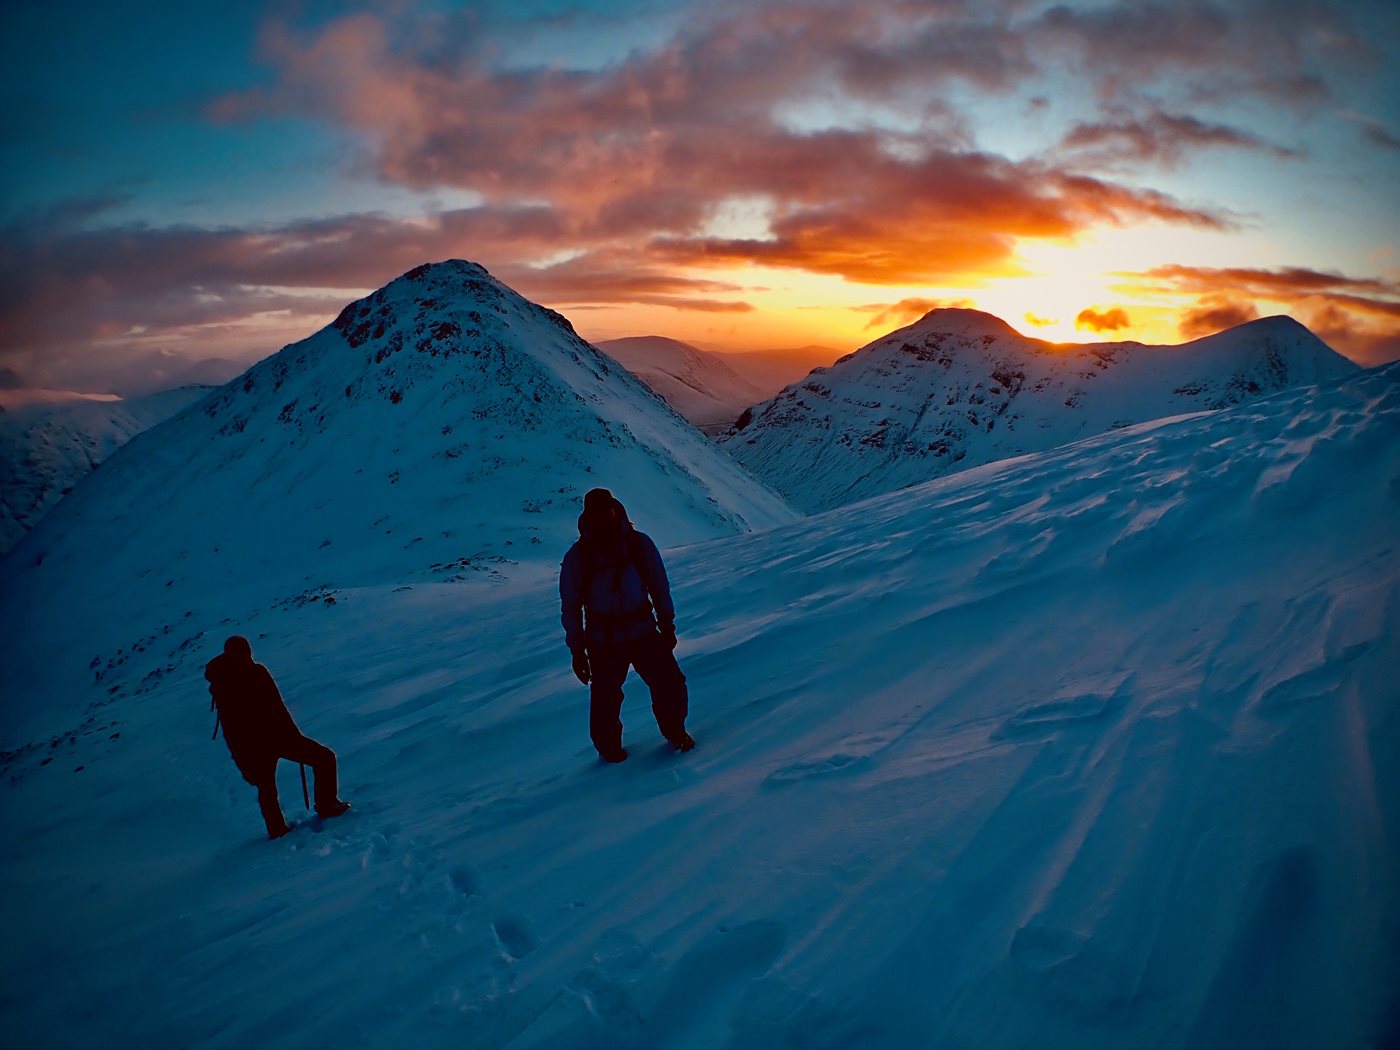 Winter Mountaineering Adventure With Sunrize Over Glen Coe, Scotland, With Ocean Vertical